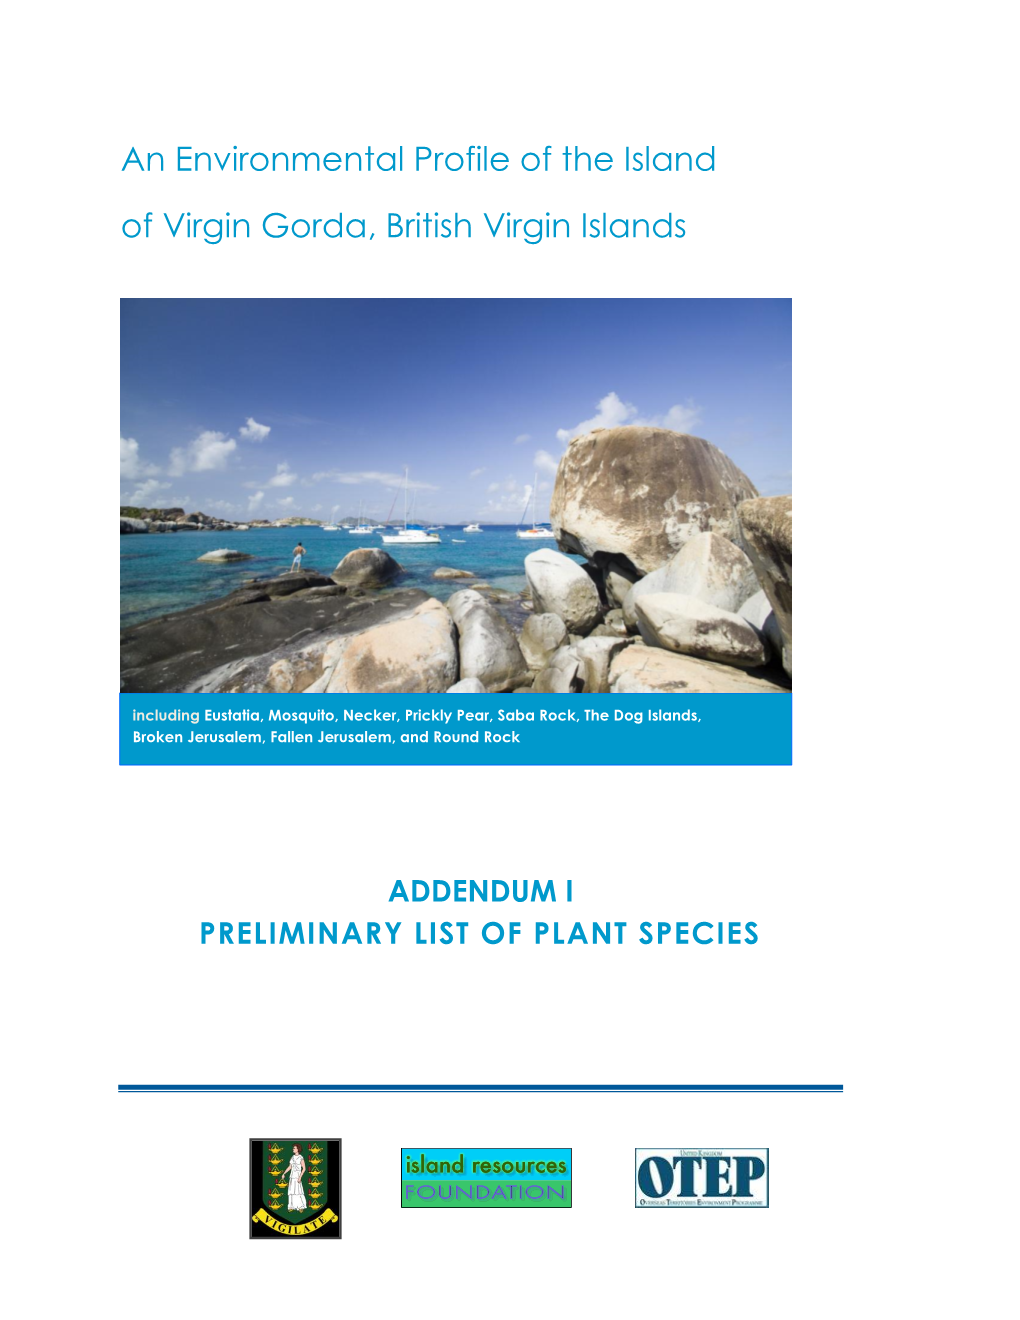 Virgin Gorda Environmental Profile, Addendum I, Plant List